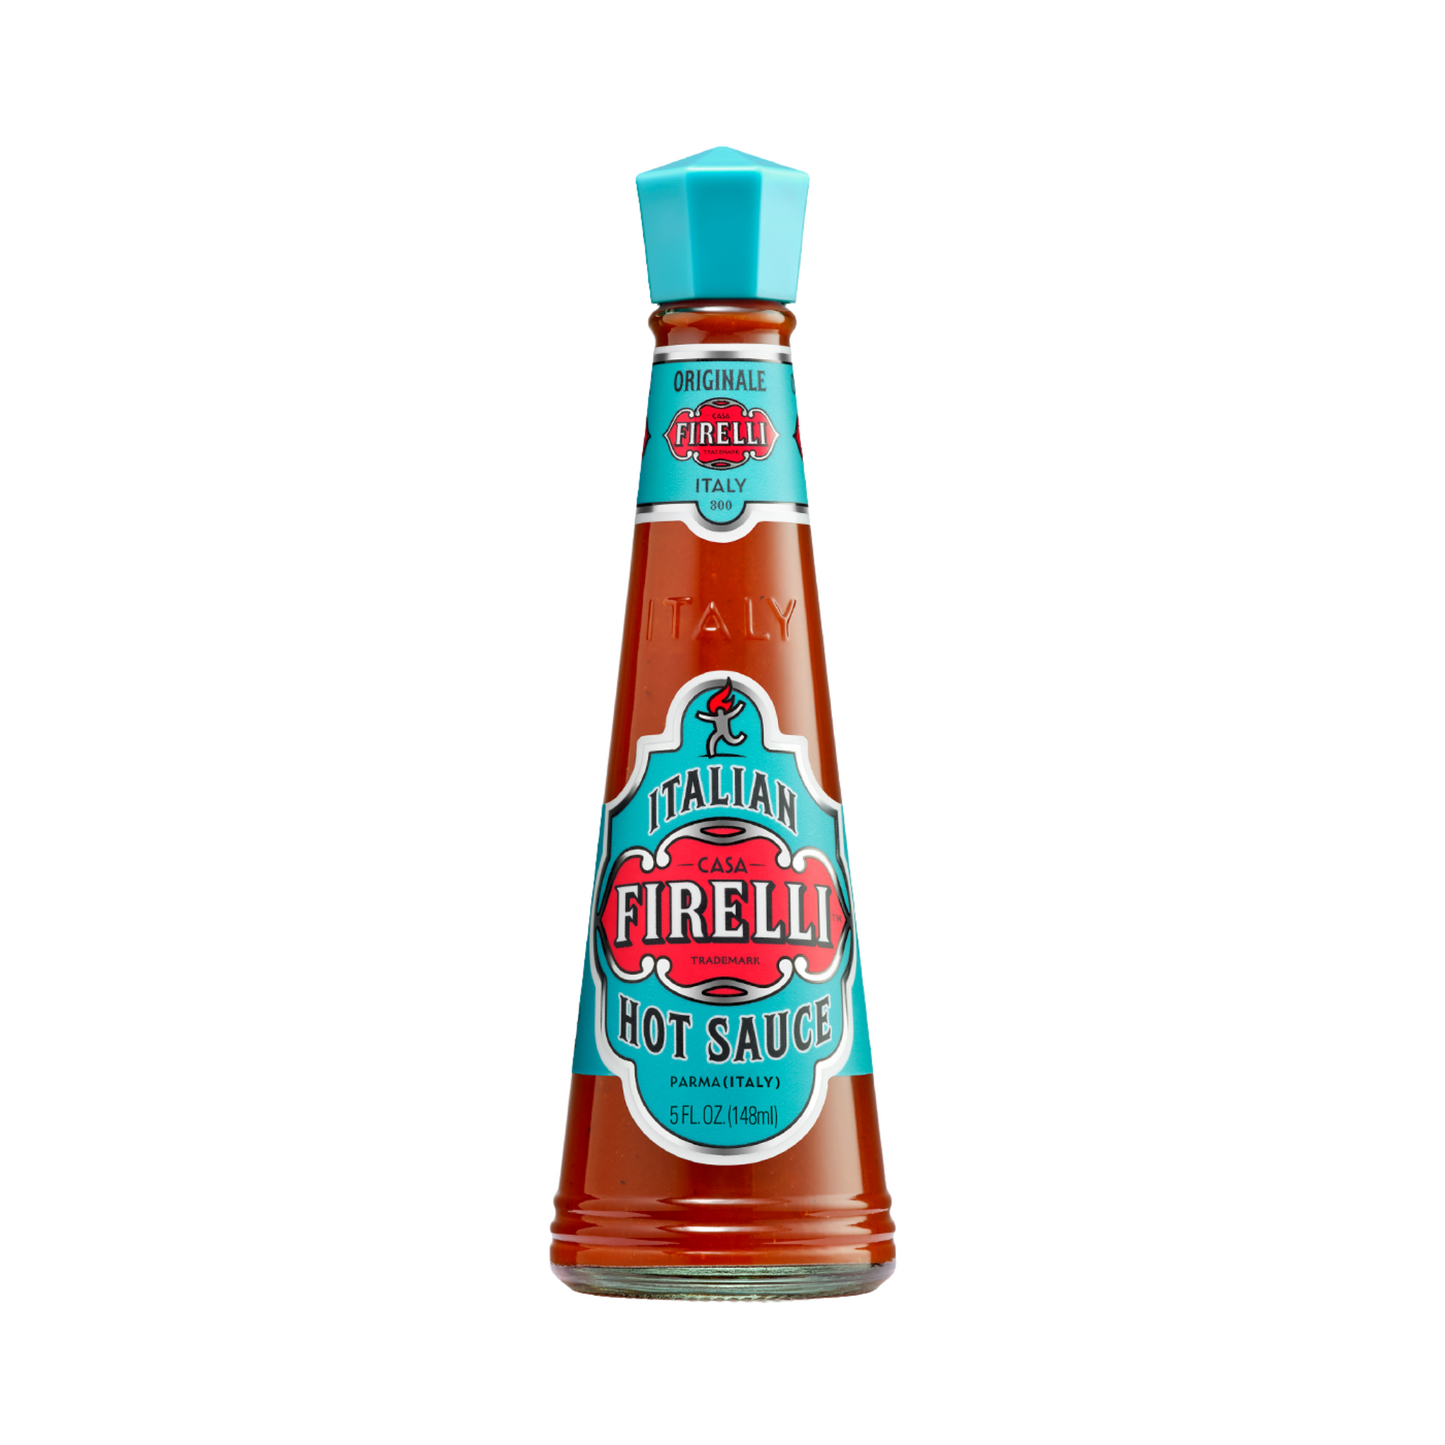 CASA FIRELLI Italian Original Hot Sauce 148ml